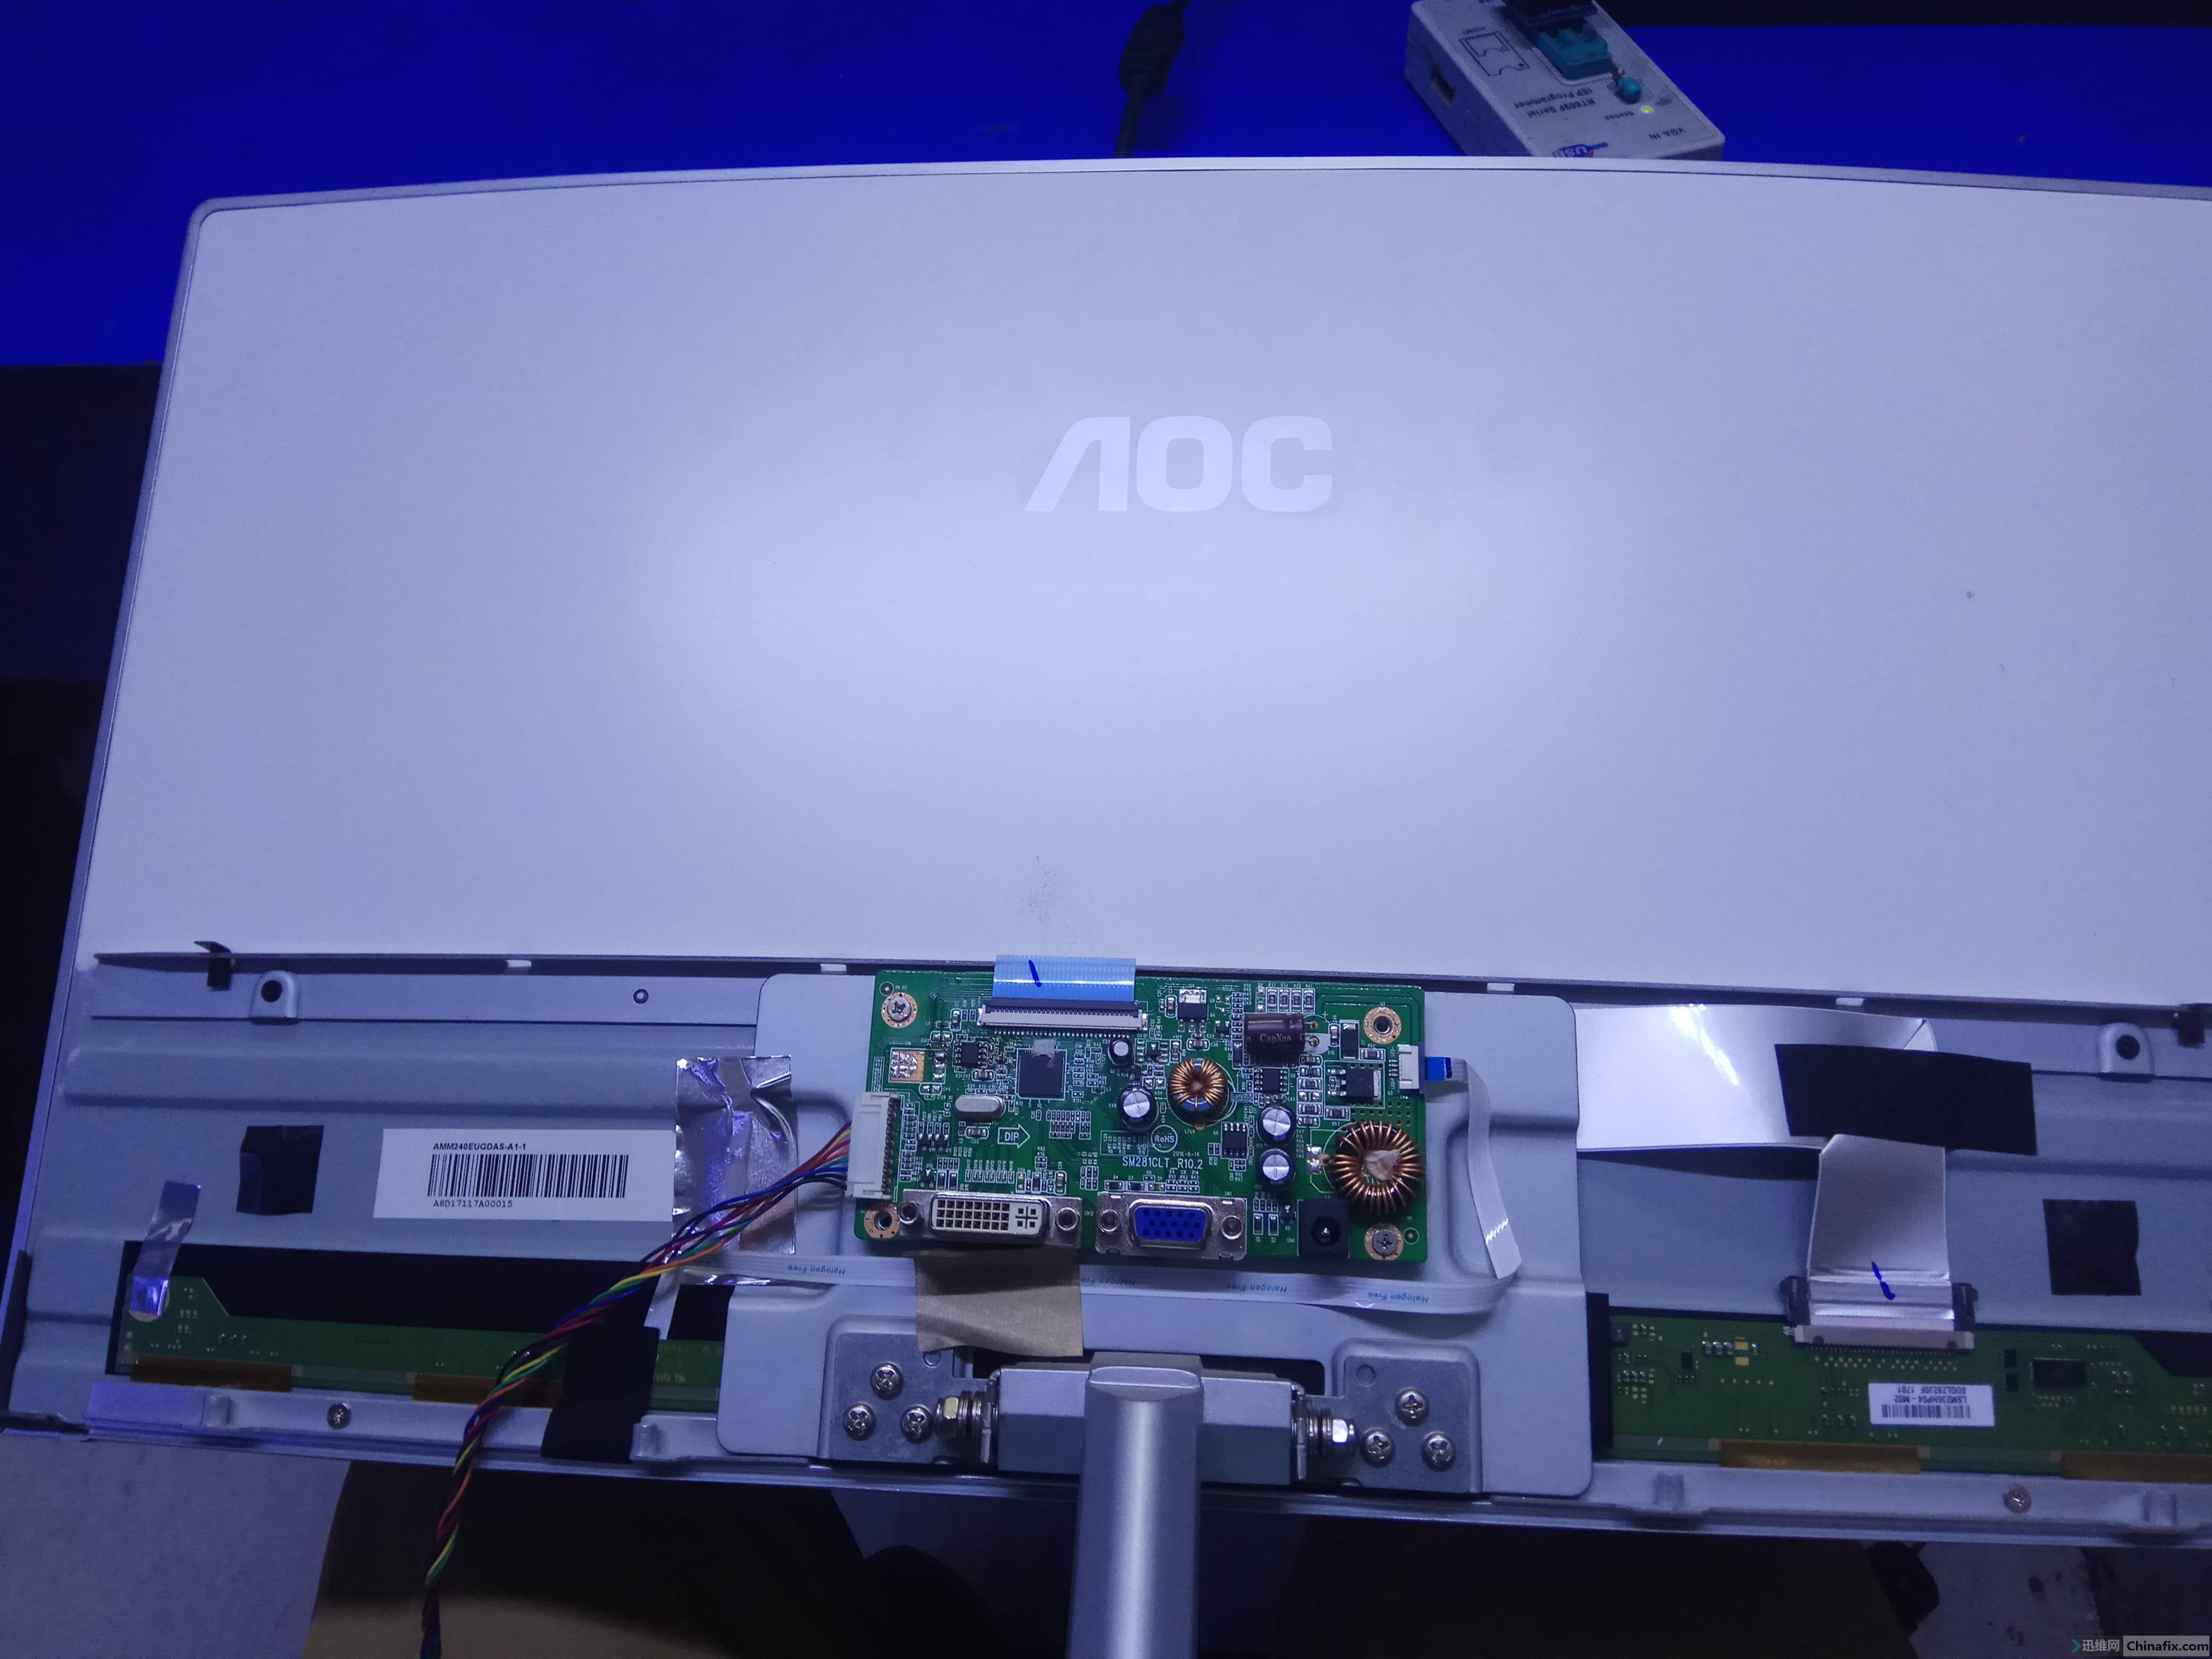 aoc3208显示器的参数图片